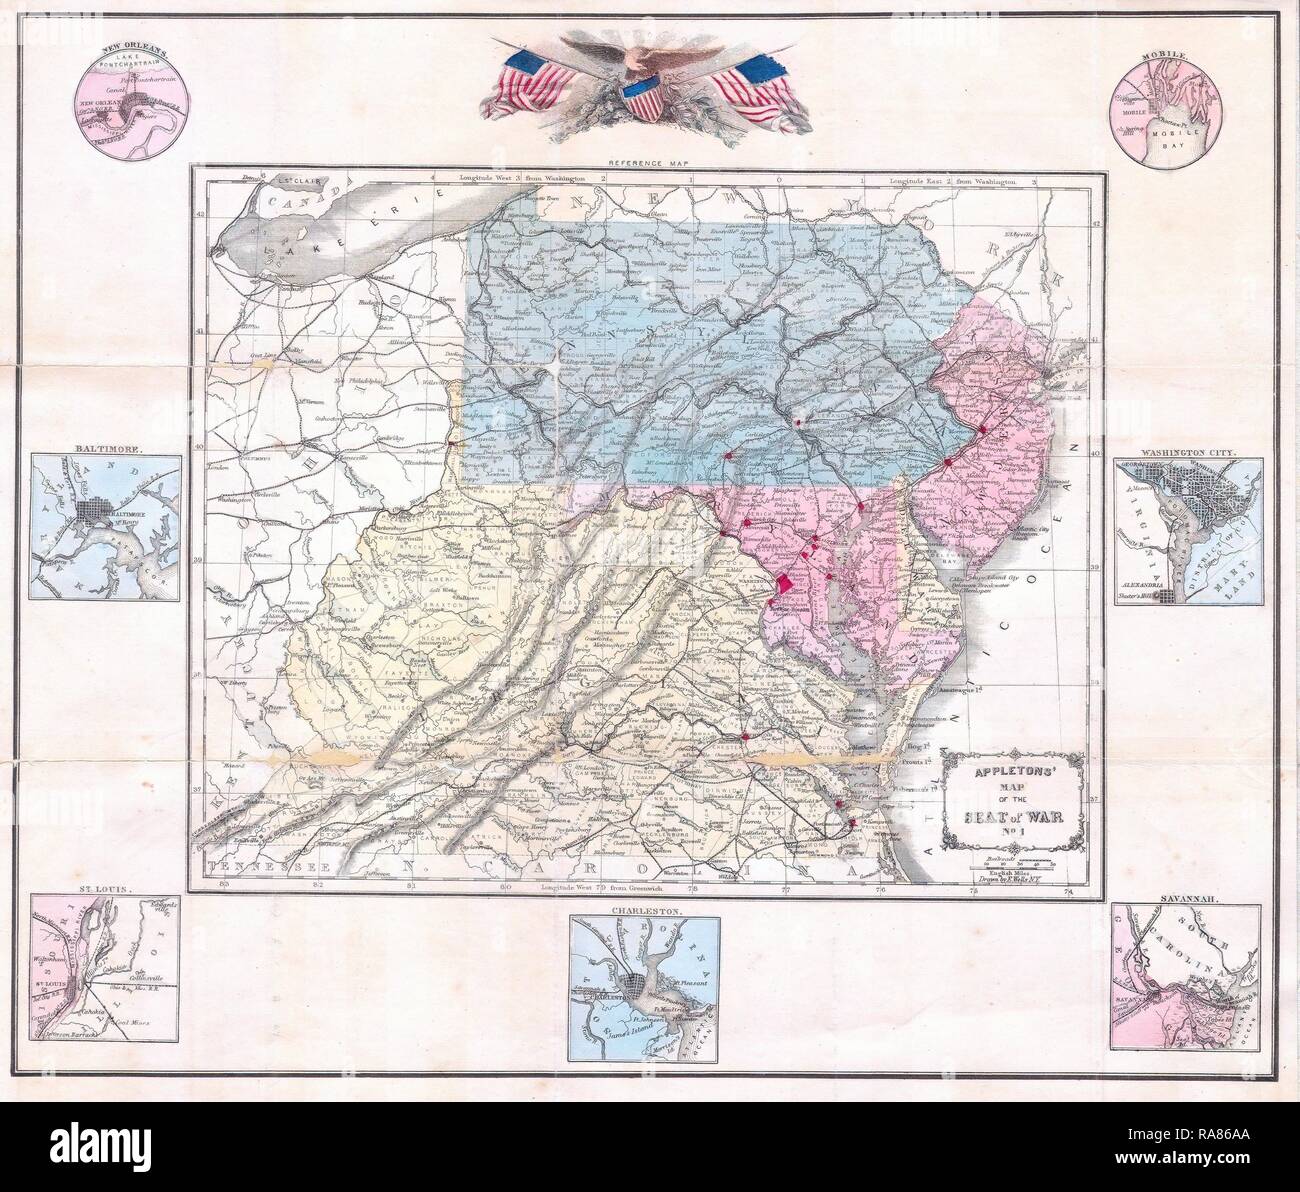 1861, Appleton's Map of the Seat of the Civil War, Pennsylvania, Virginia, Maryland, North Carolina. Reimagined Stock Photo